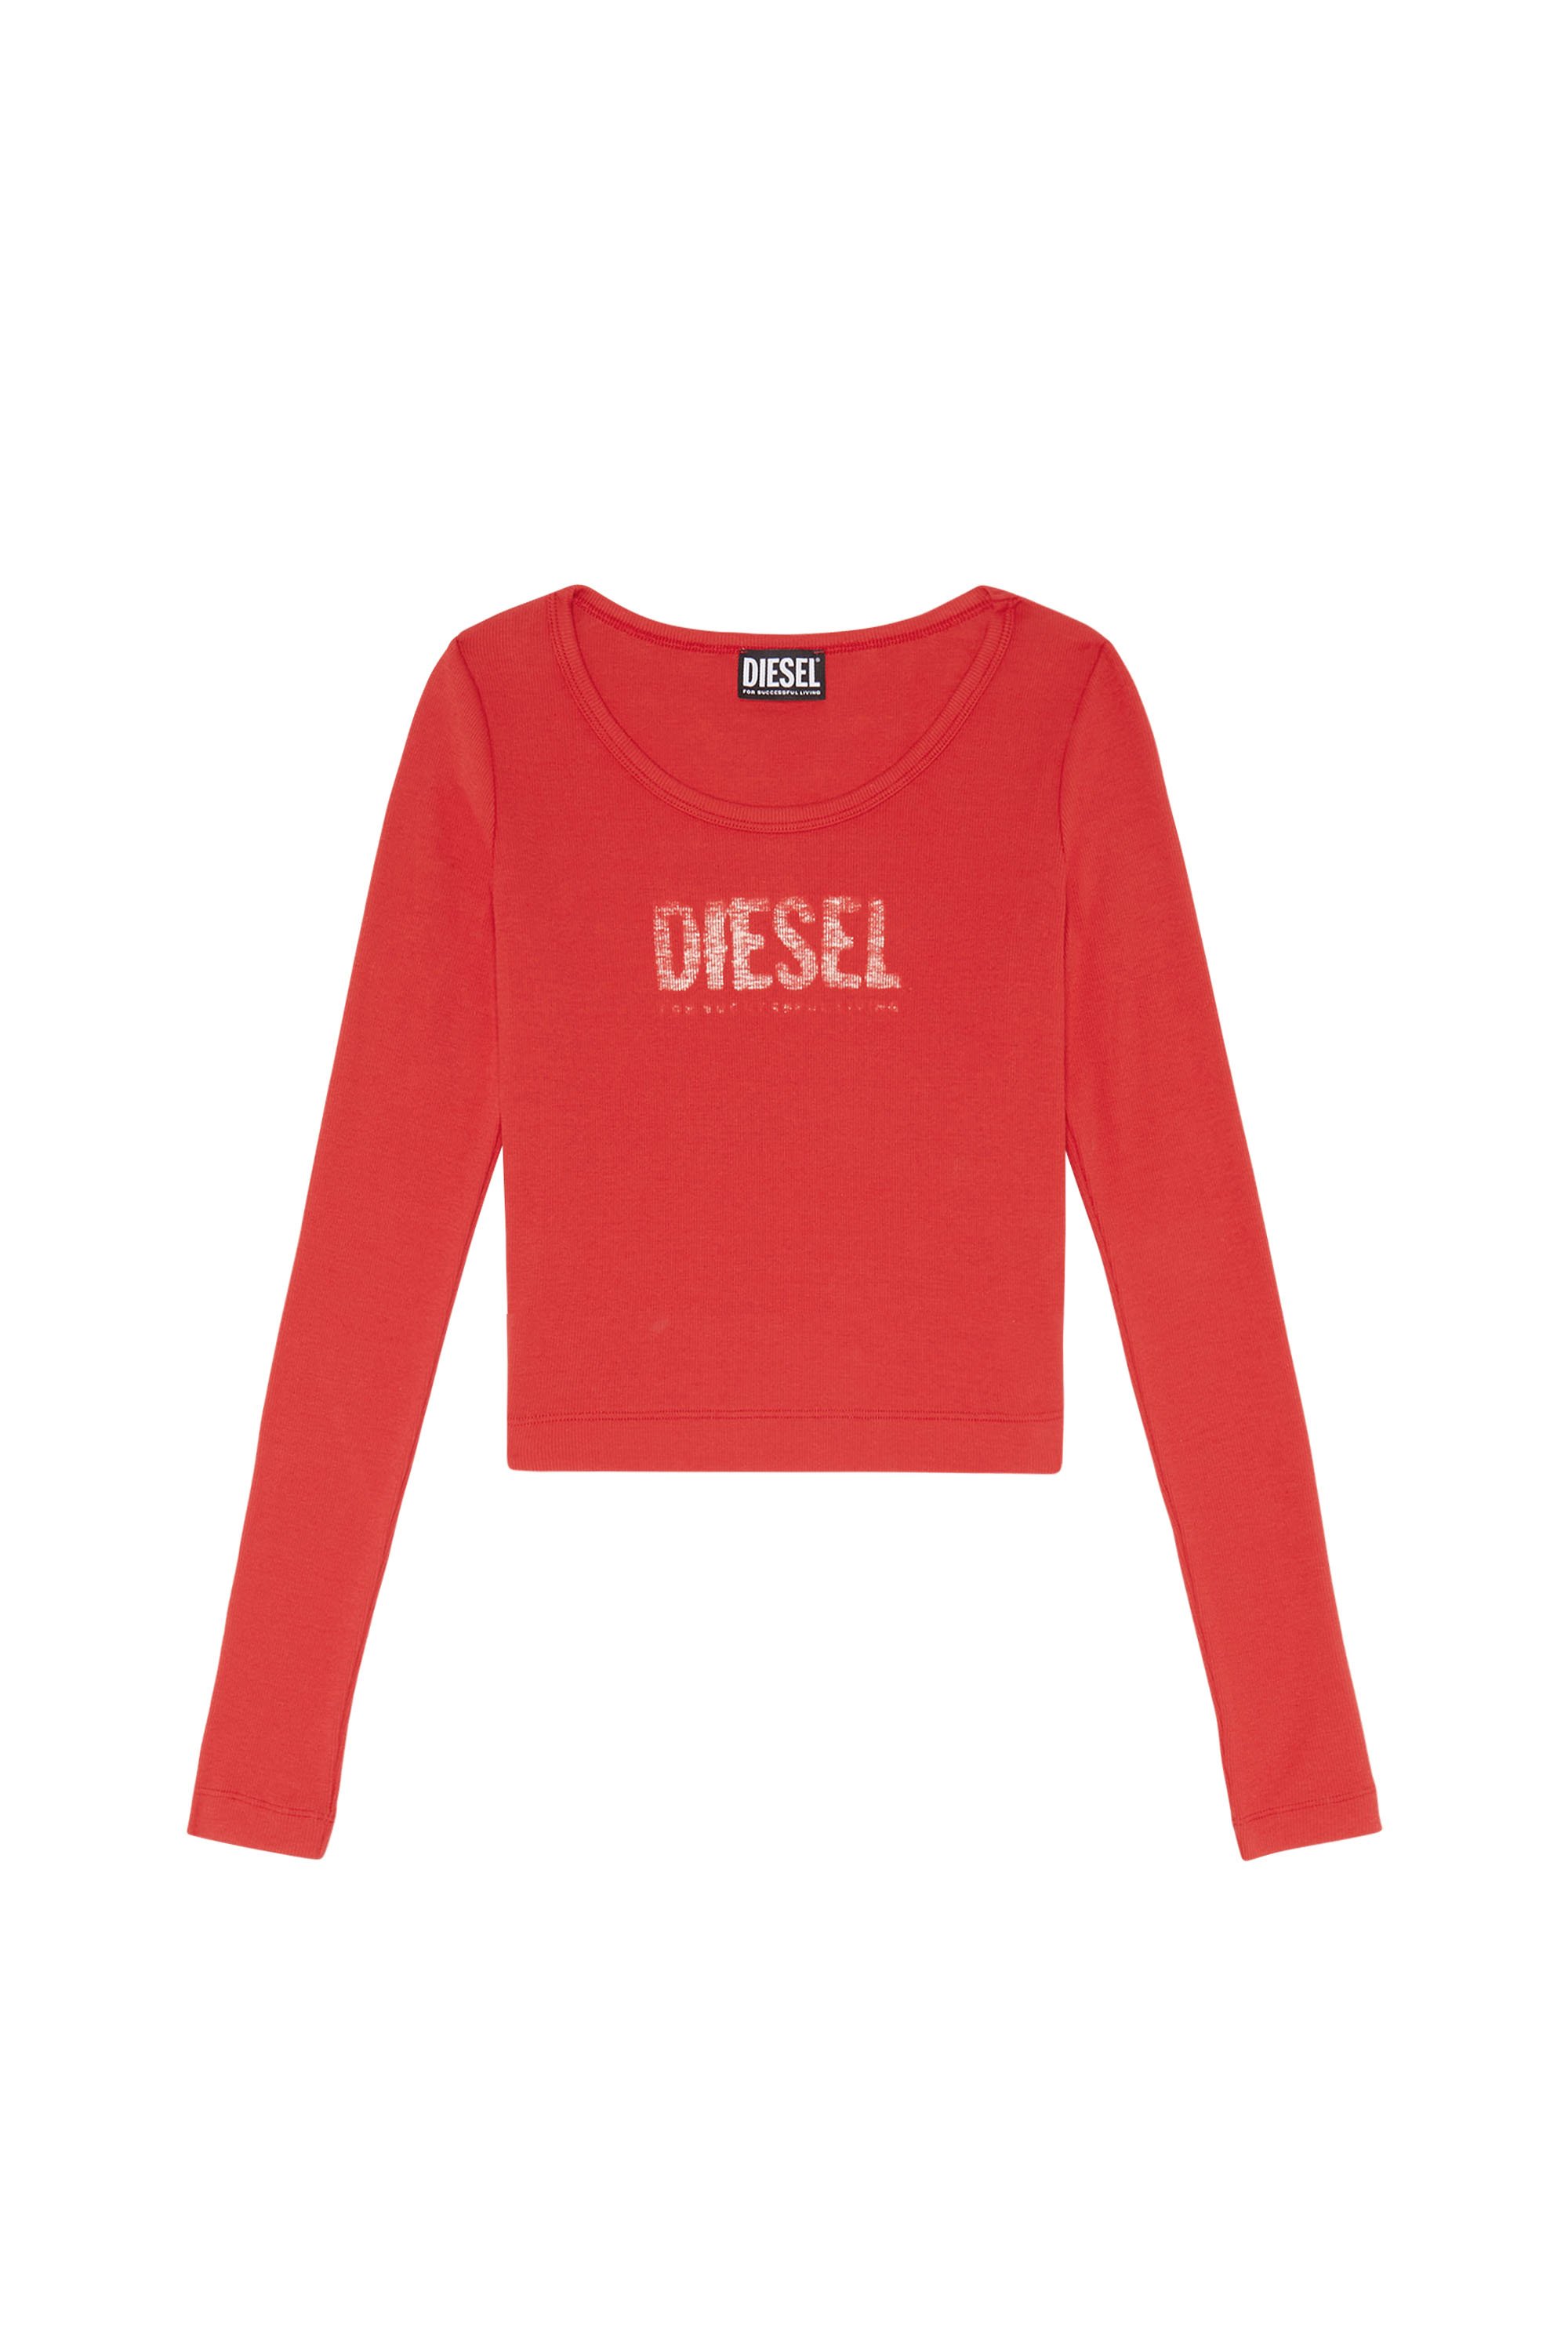 Diesel - T-BALLET-E1, Rosso - Image 1